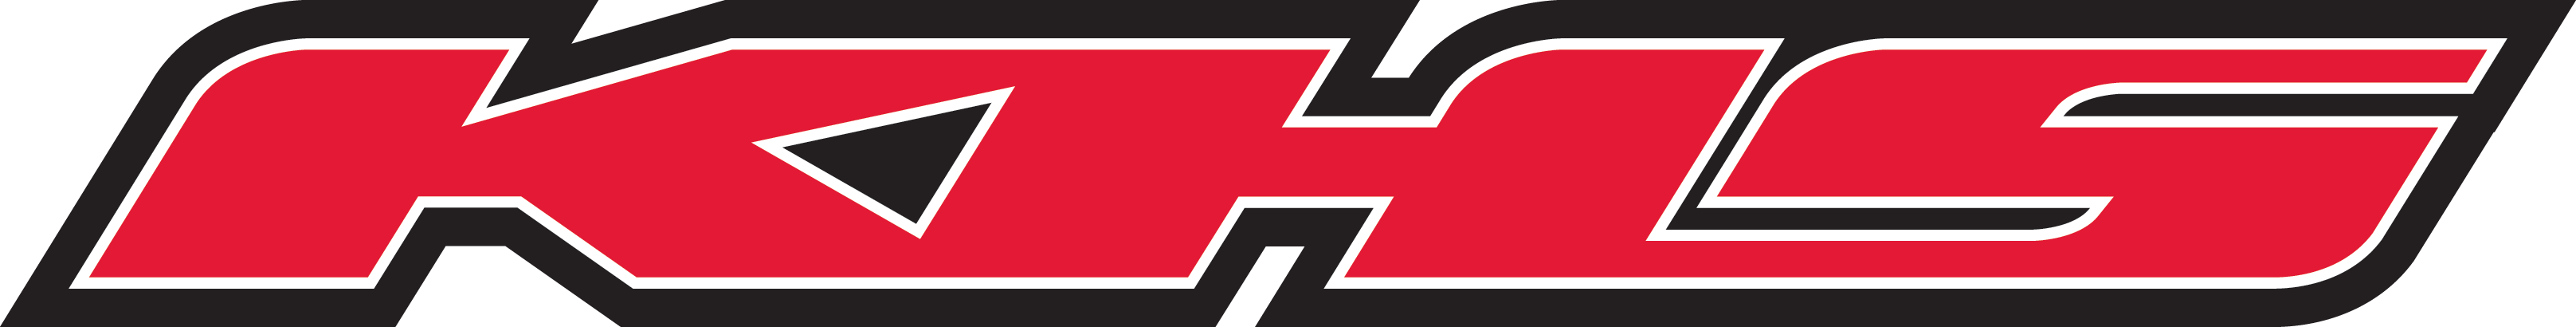 KHS Logo - KHS Red Black White Logo. Yackle Brothers Racing